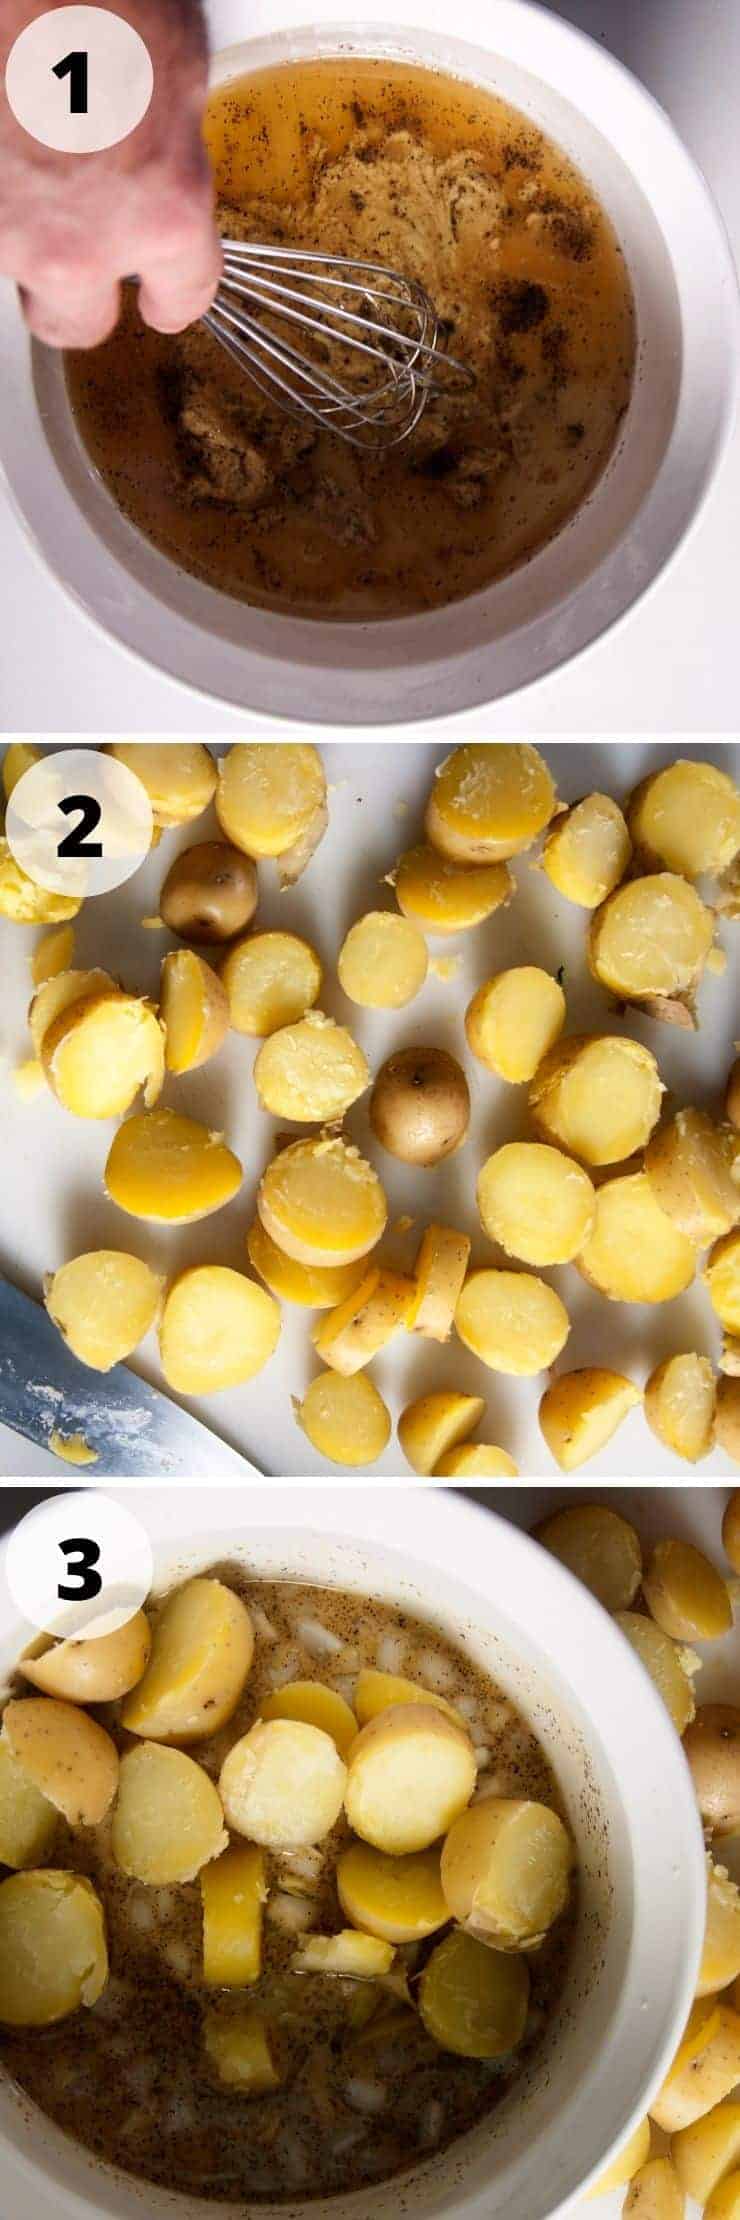 German Potato Salad Process Shots 1-3.